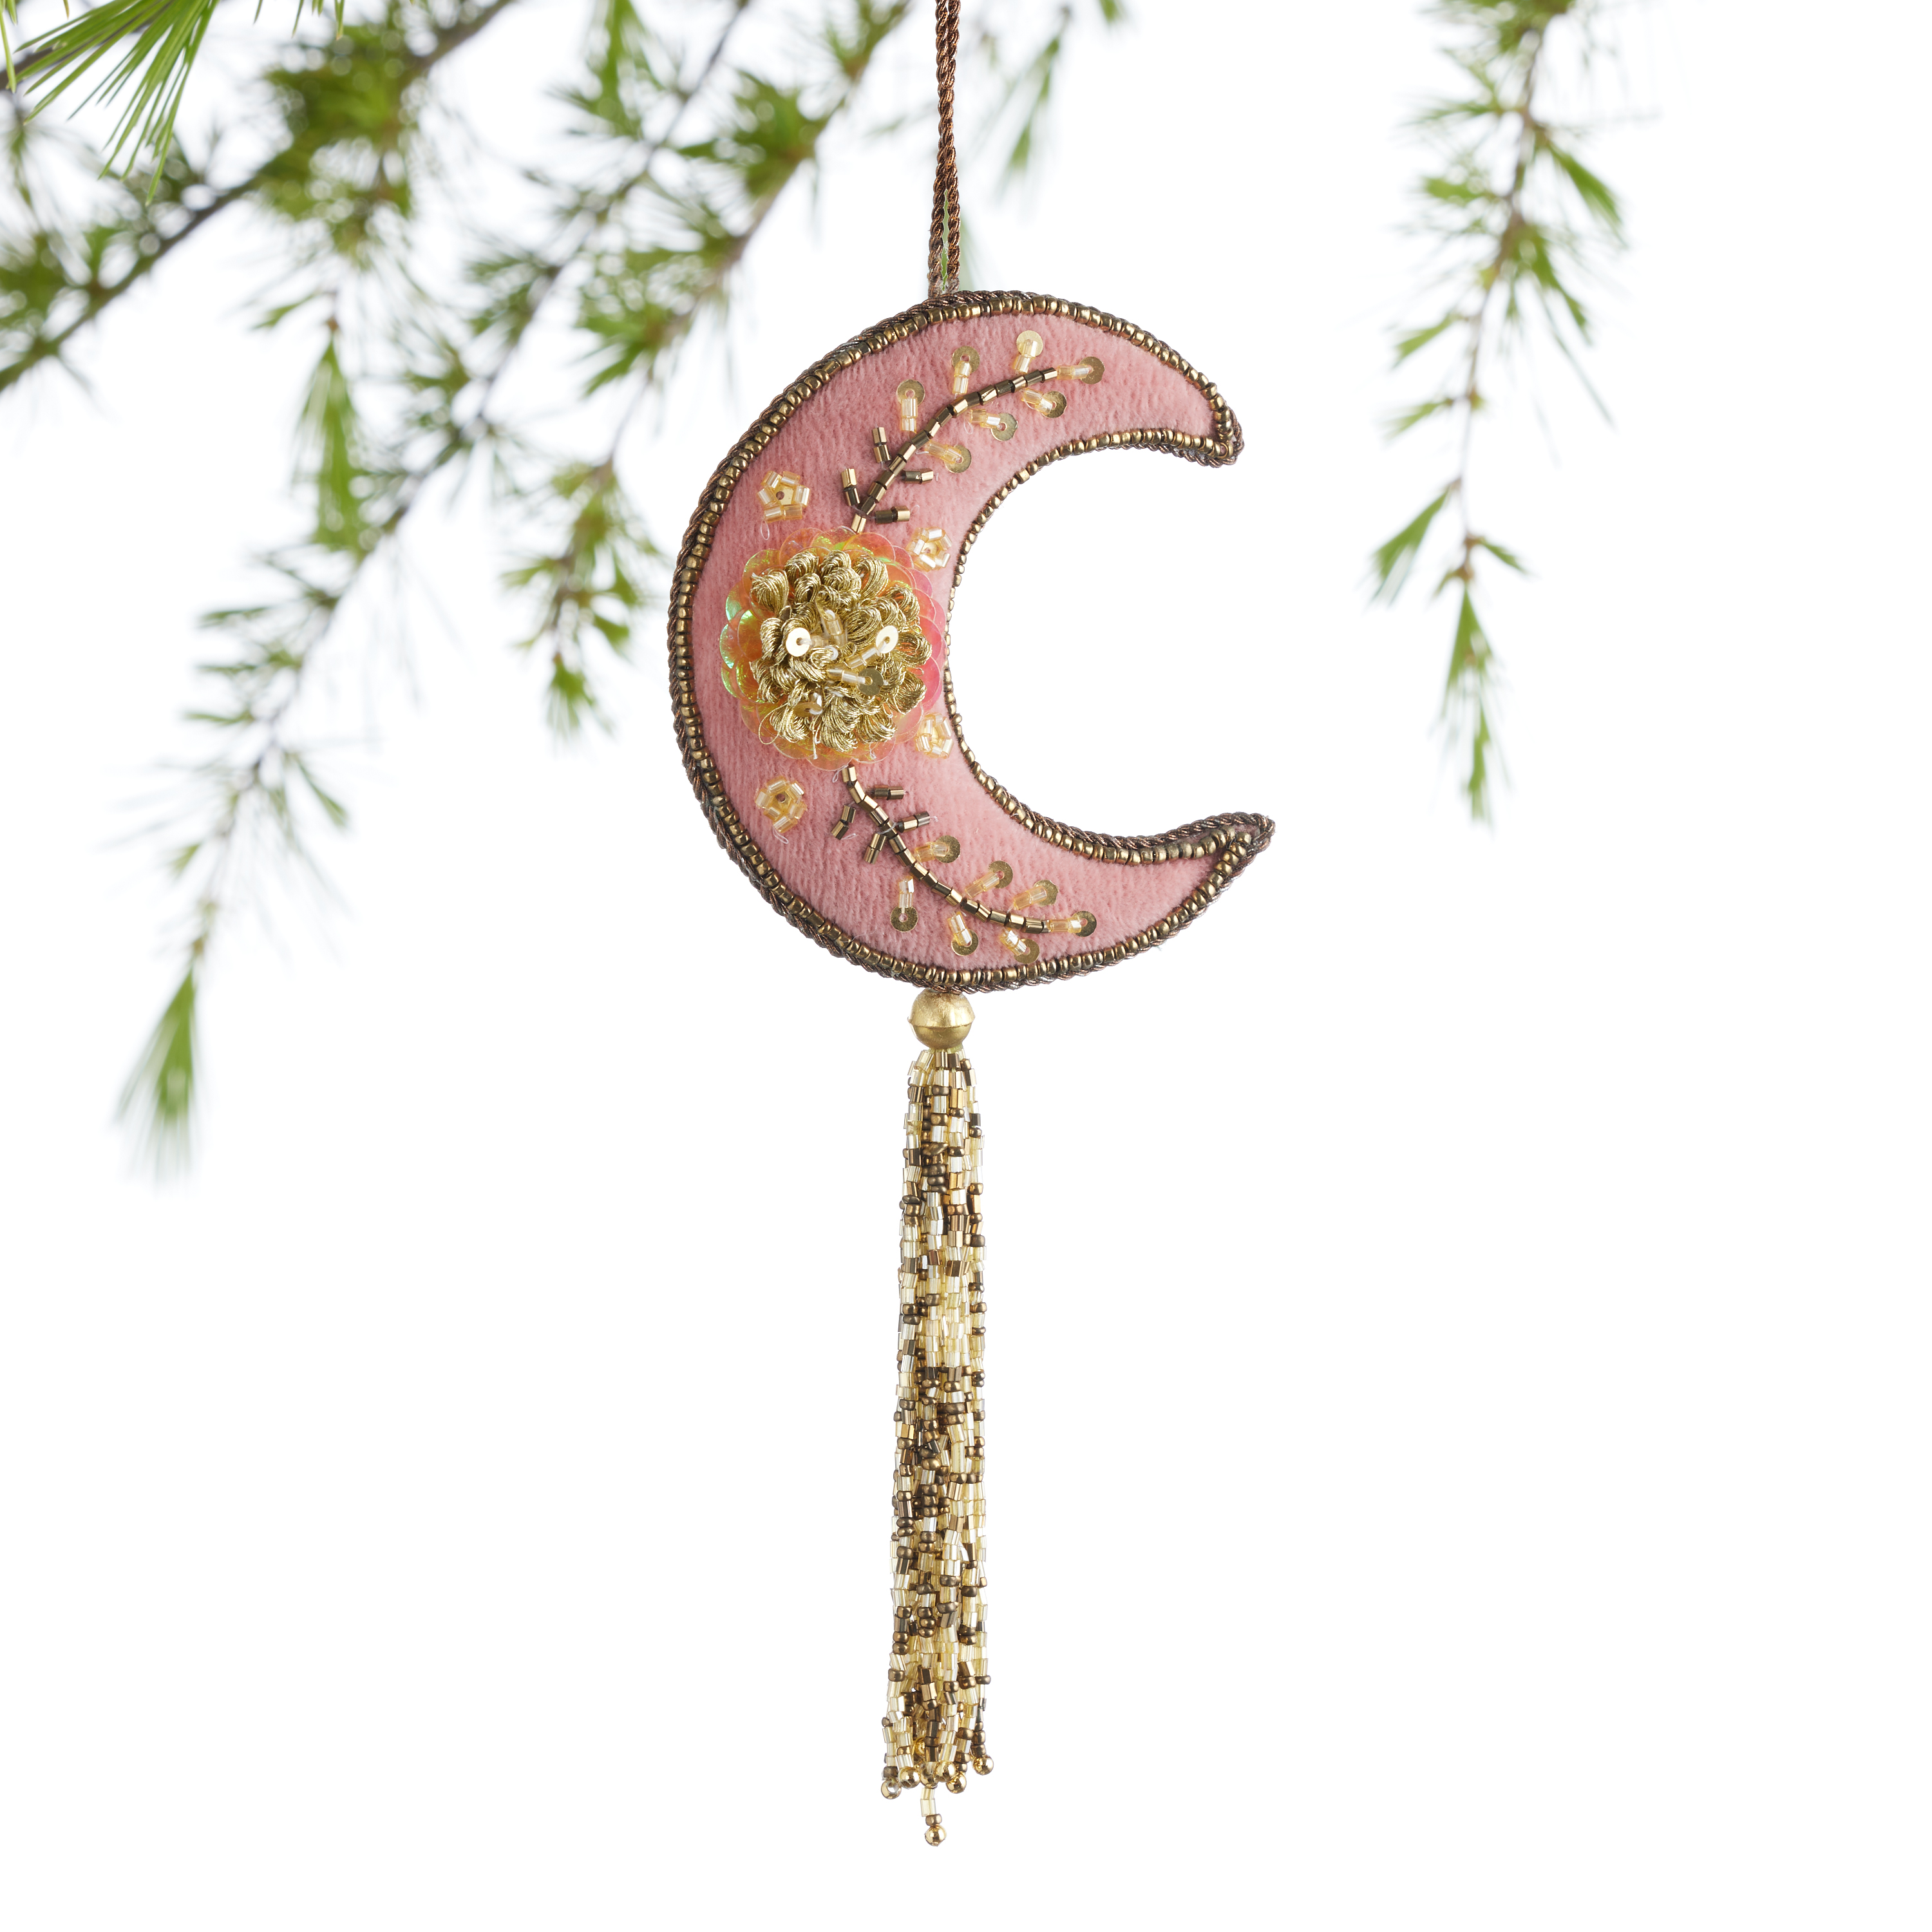 crescent moon symbolismbaround the world